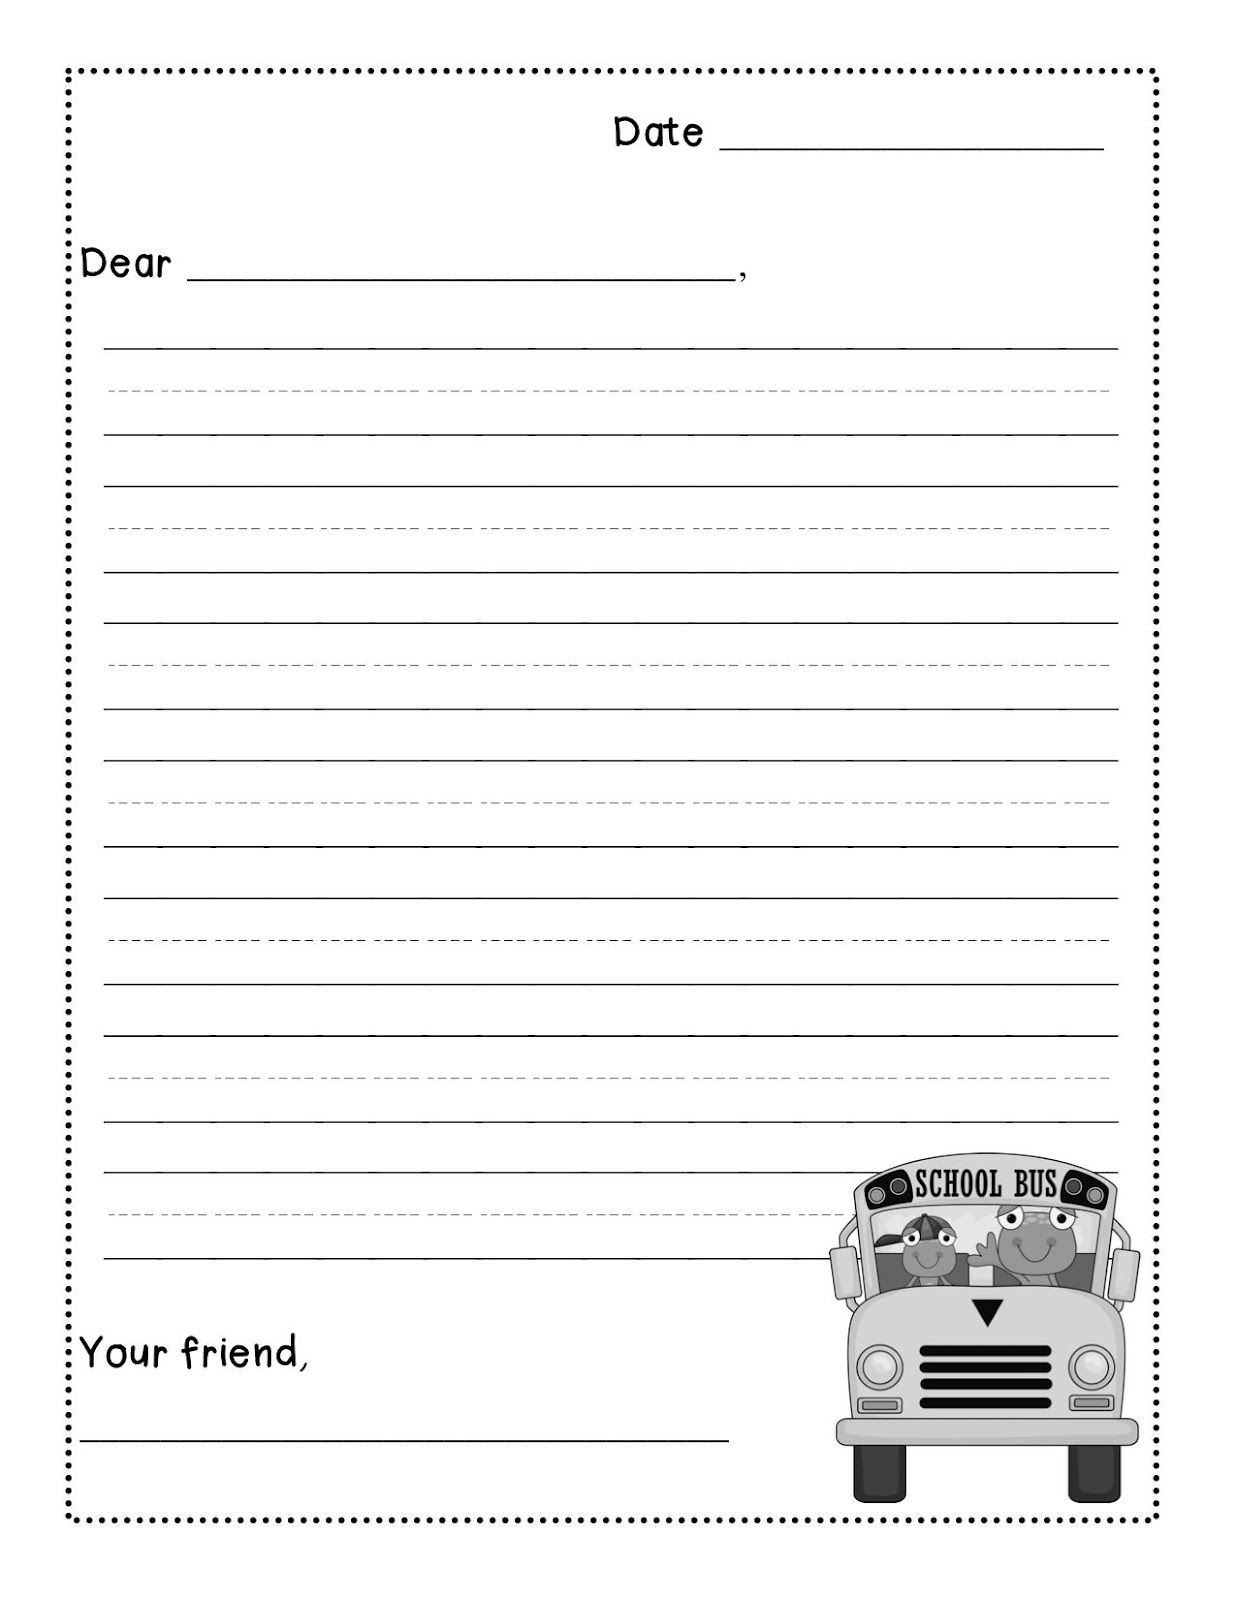 Writing A Letter Worksheet 1st Grade